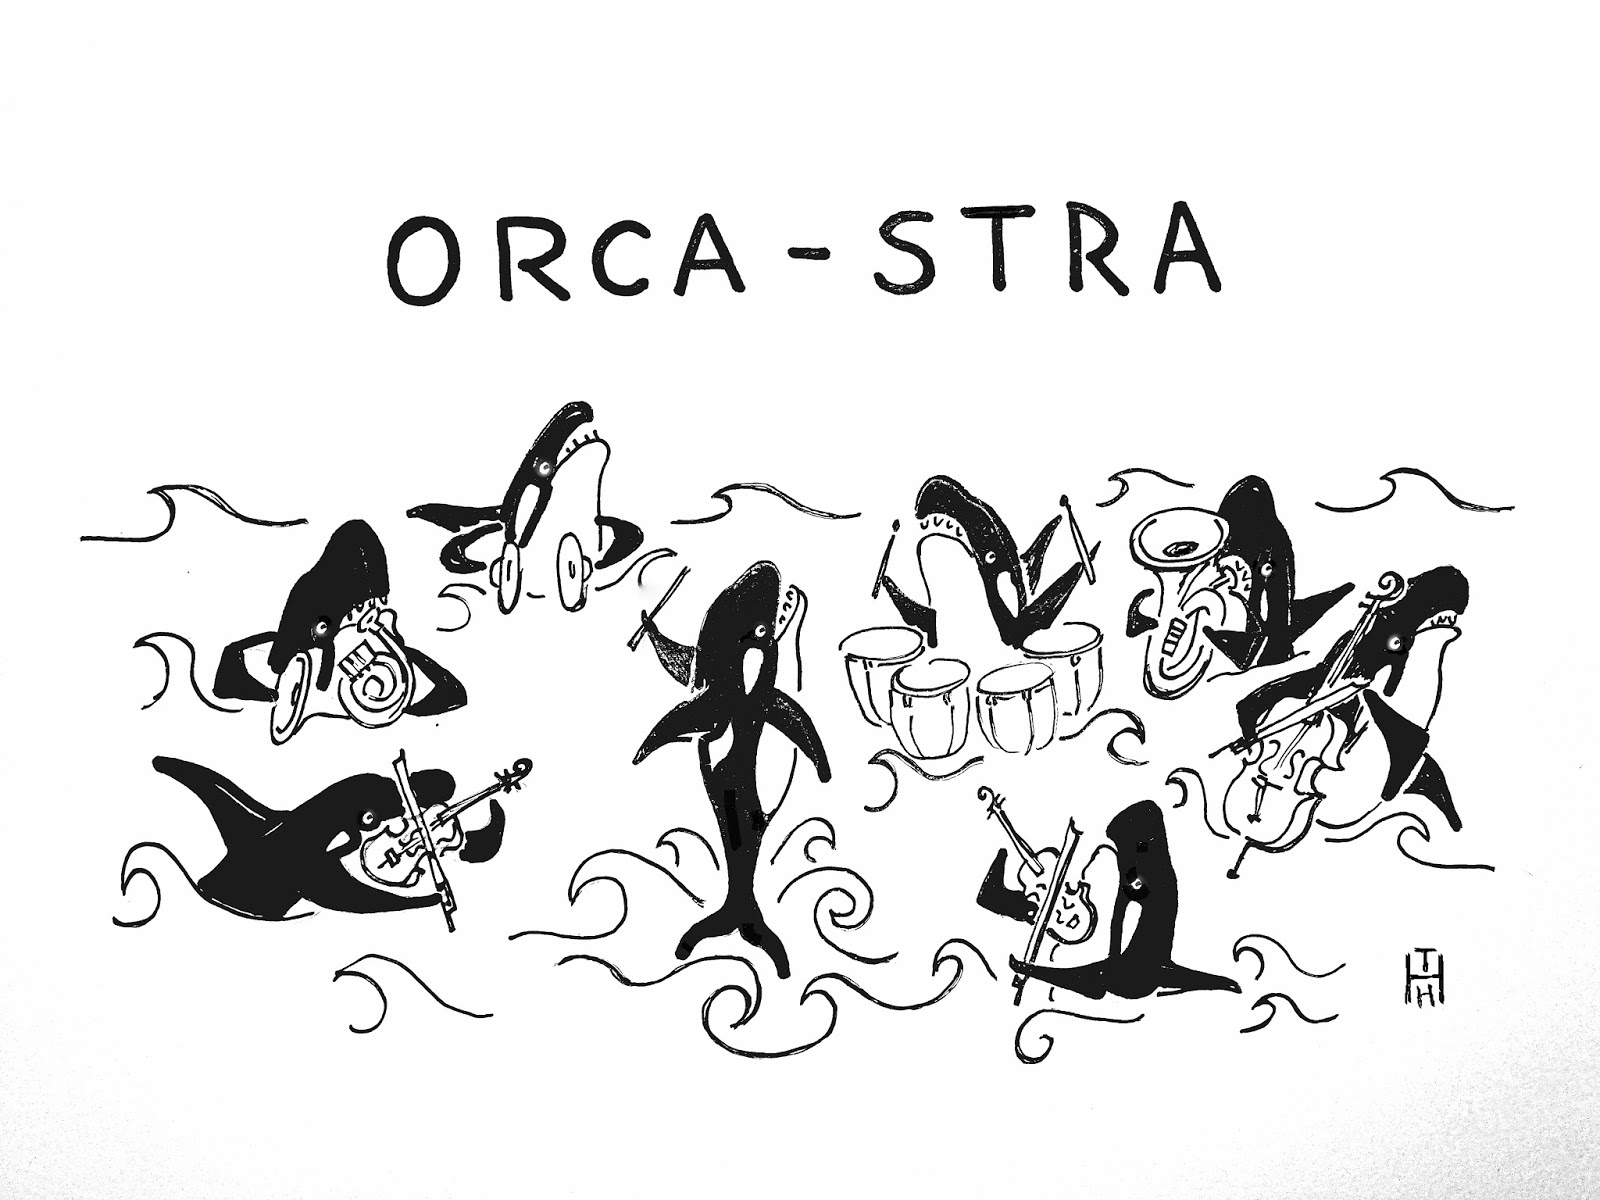 Orca-stra.jpg